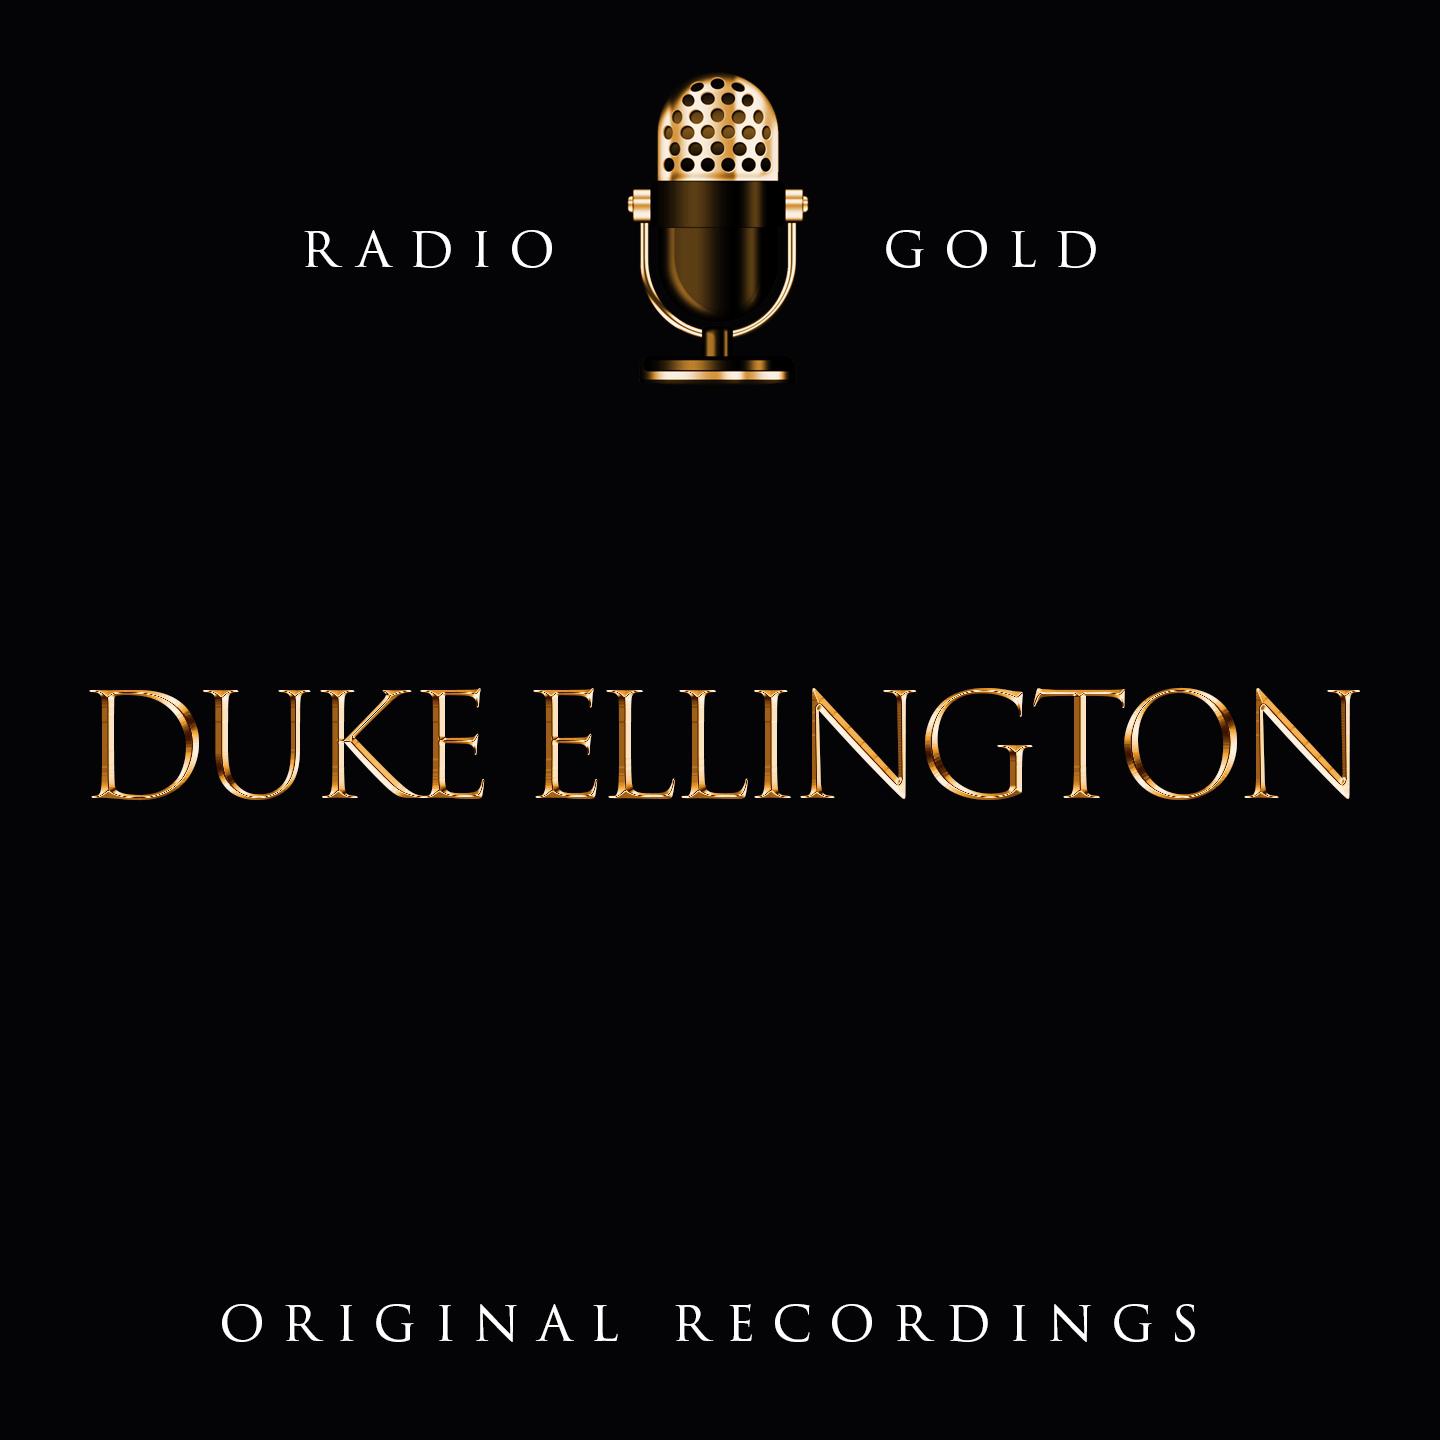 Radio Gold / Duke Ellington